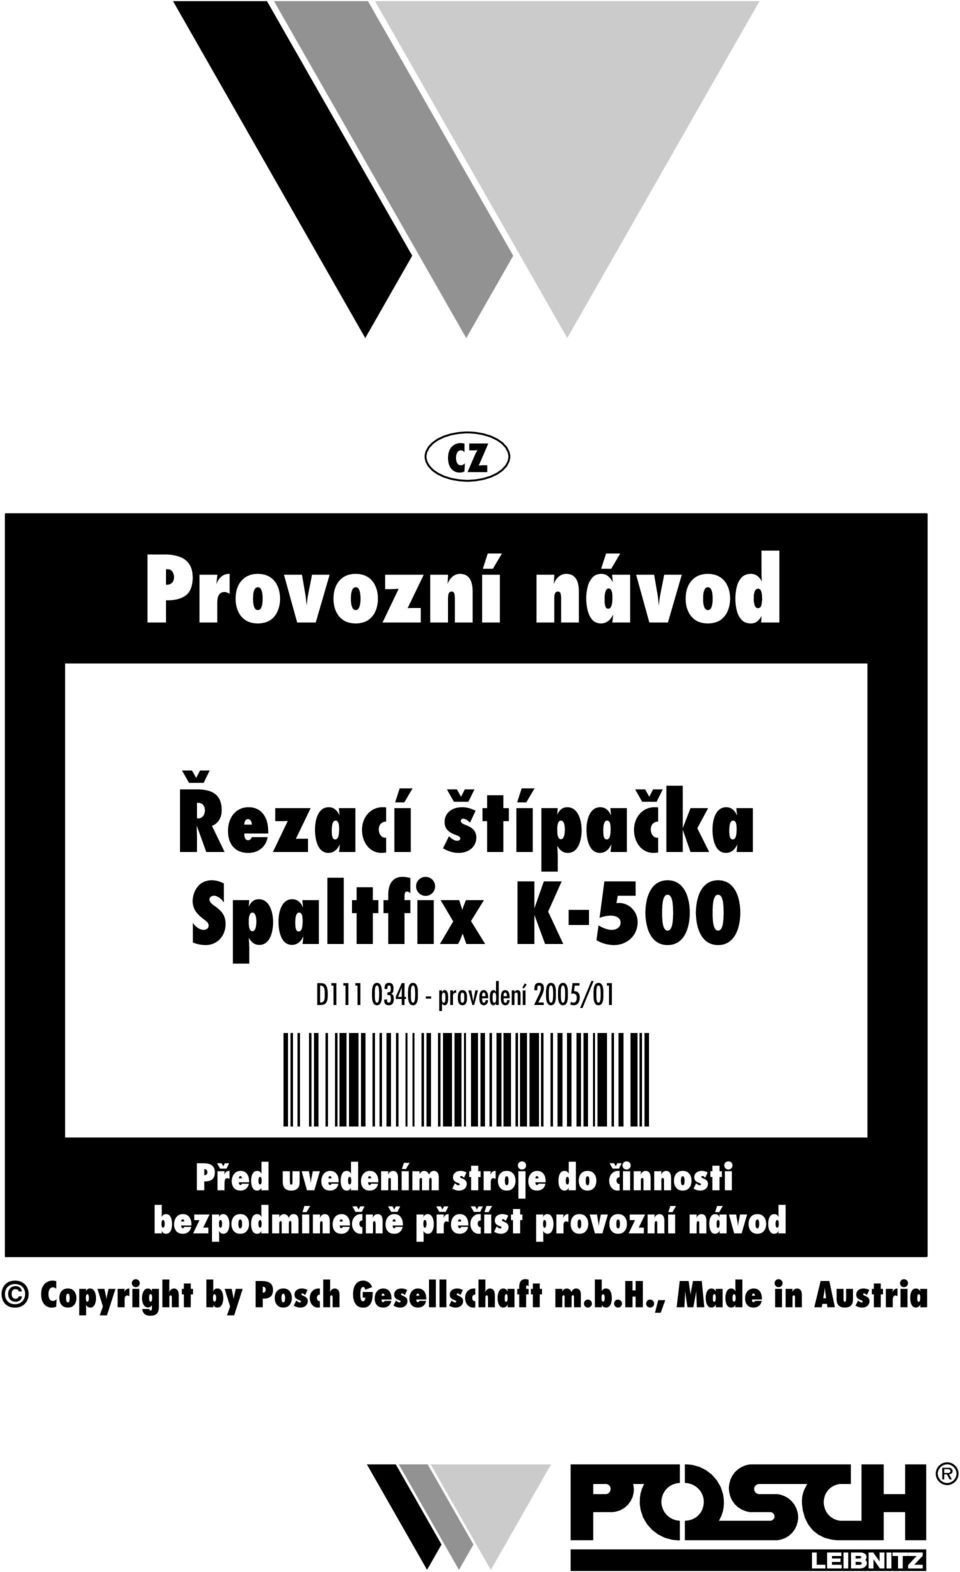 Spaltfix K-500